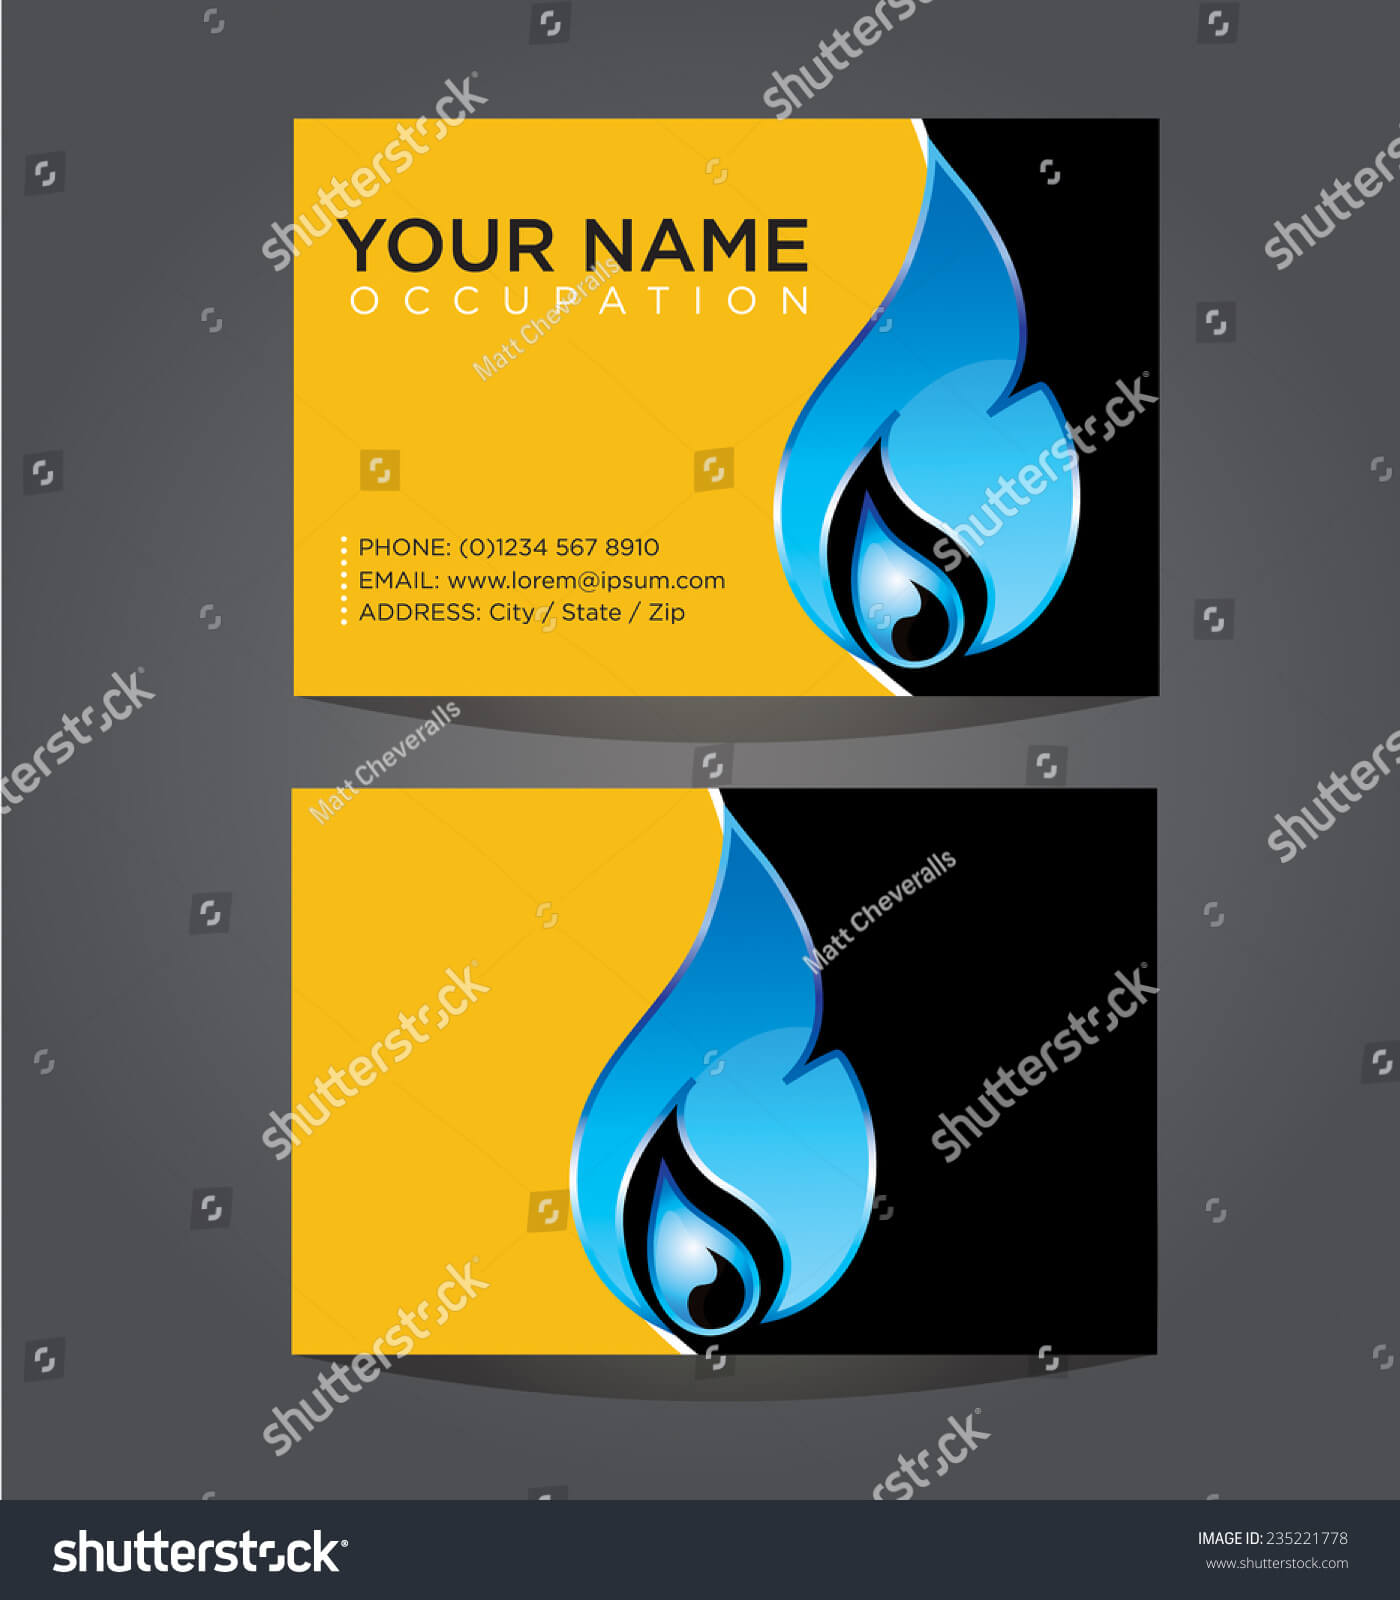 Business Card Template Plumbing Heating Air Stock Vector For Hvac Business Card Template